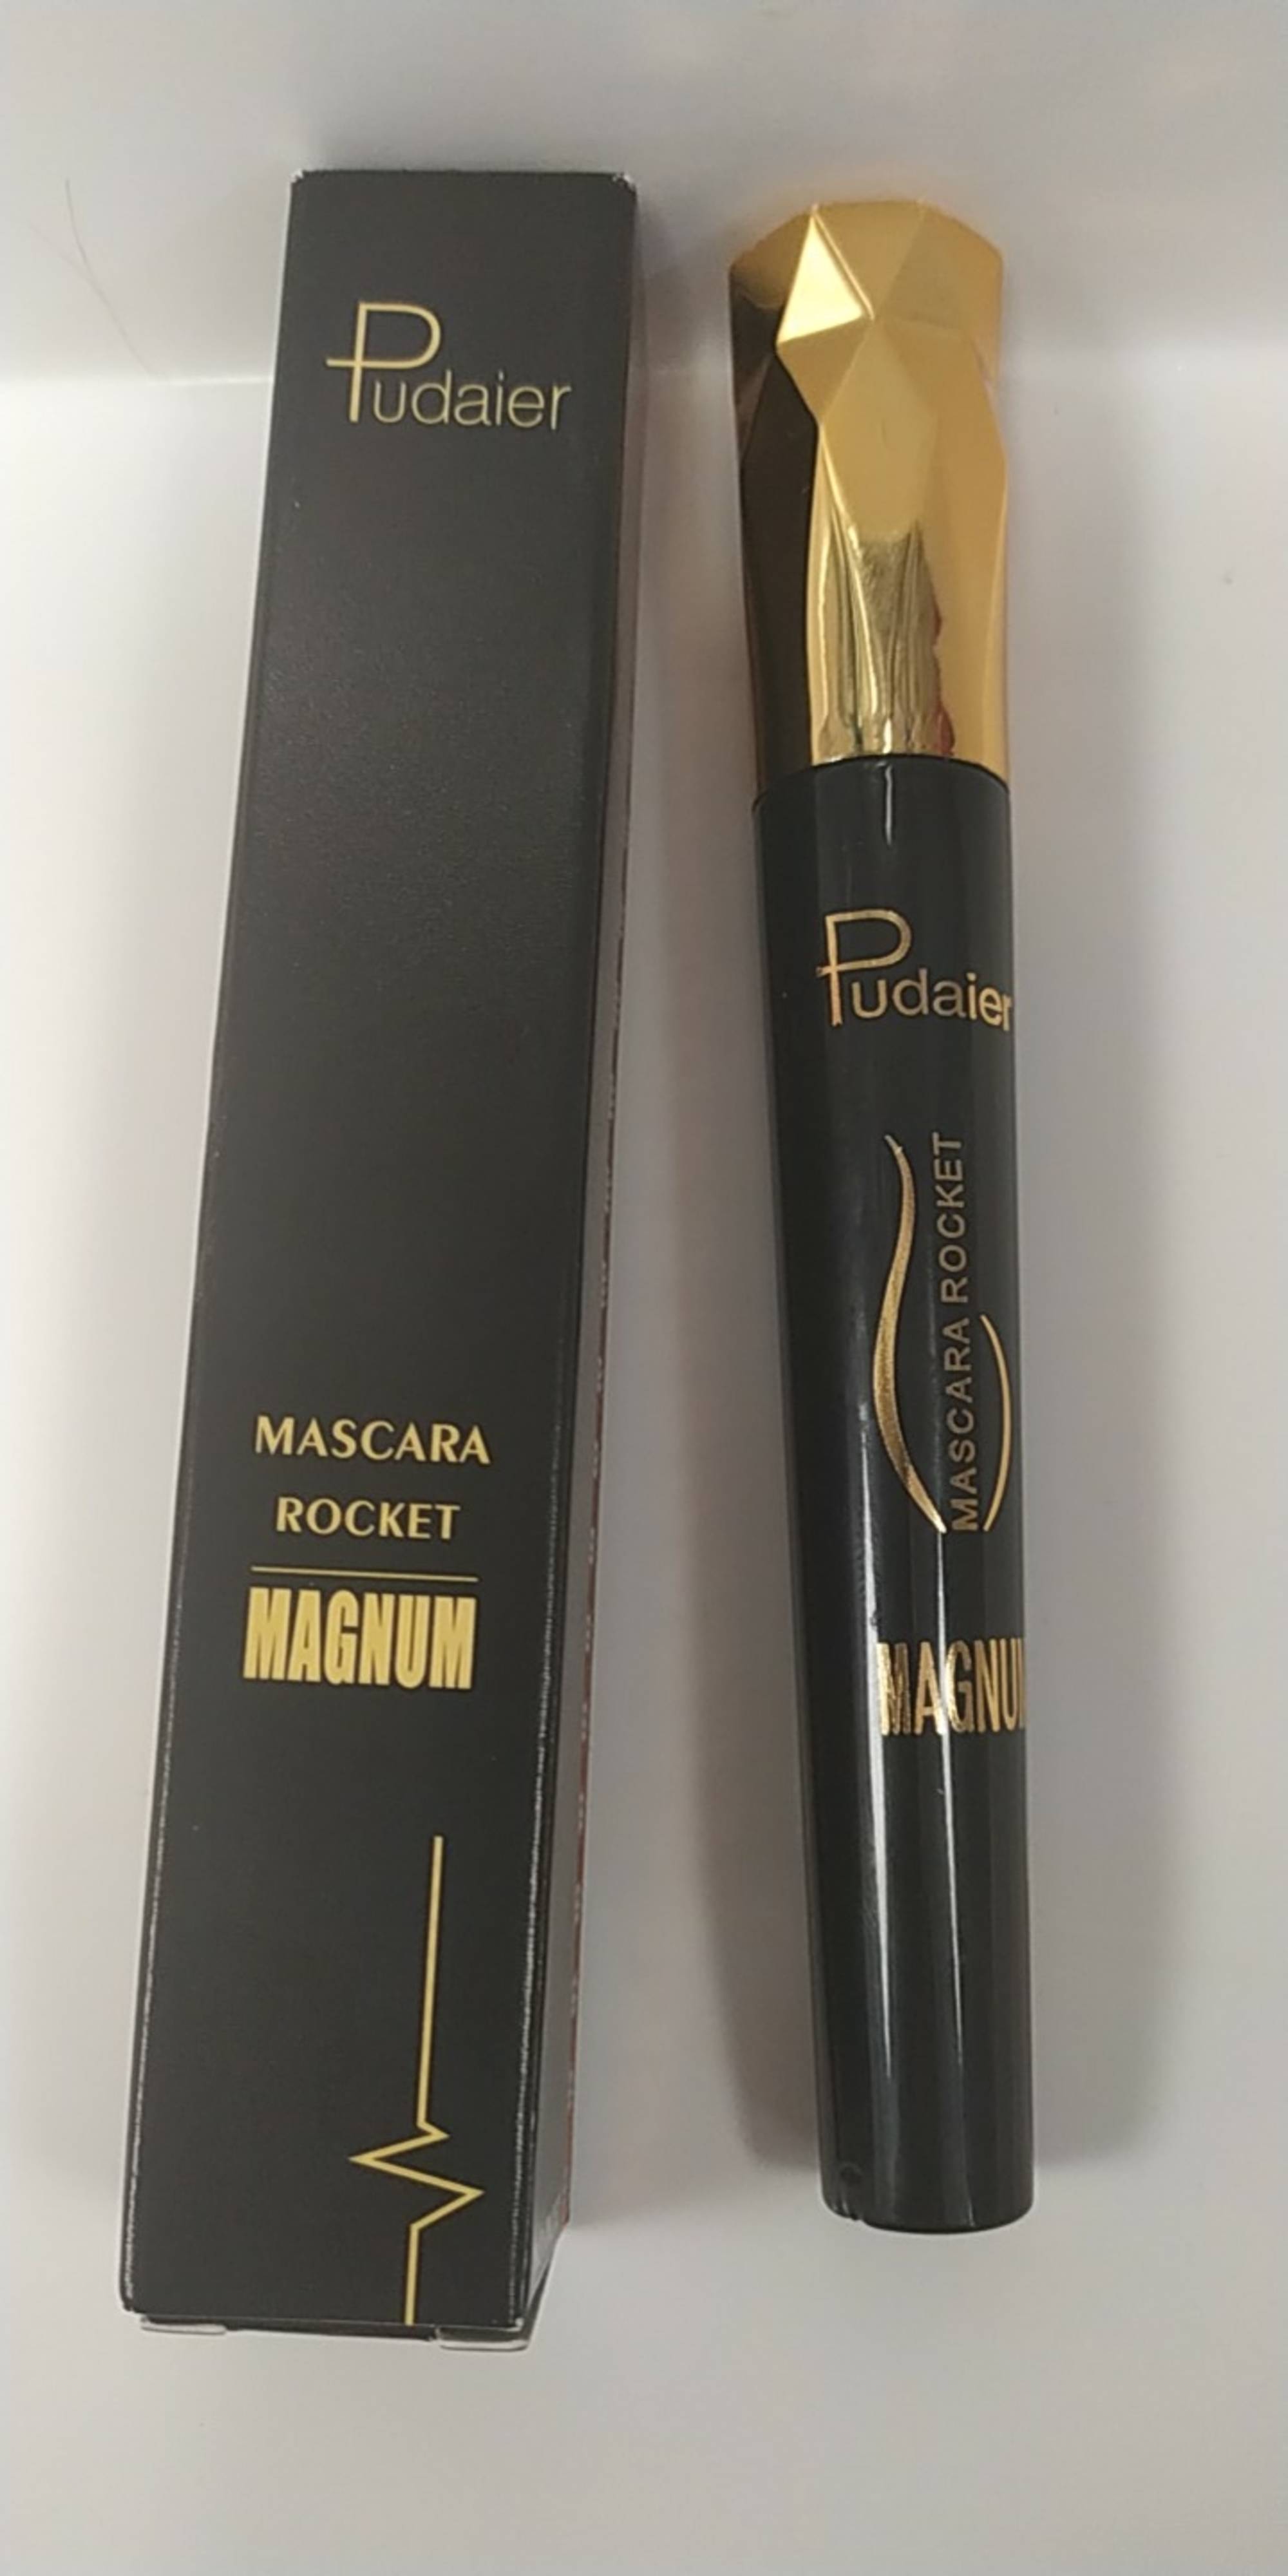 PUDAIER - Mascara rocket magnum